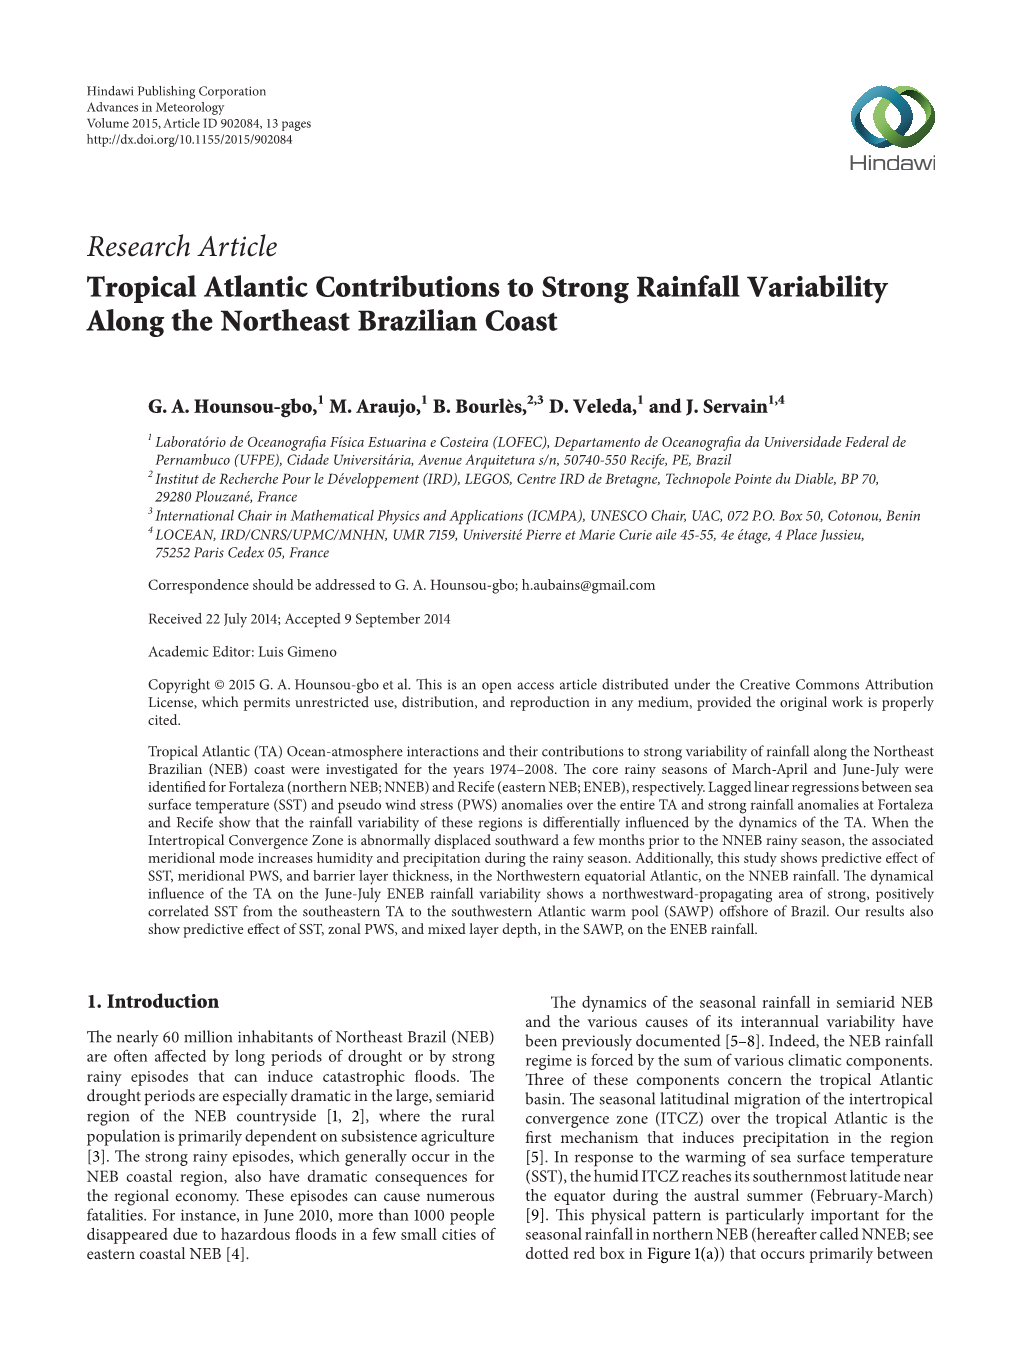 Tropical Atlantic Contributions to Strong Rainfall Variability Along the Northeast Brazilian Coast